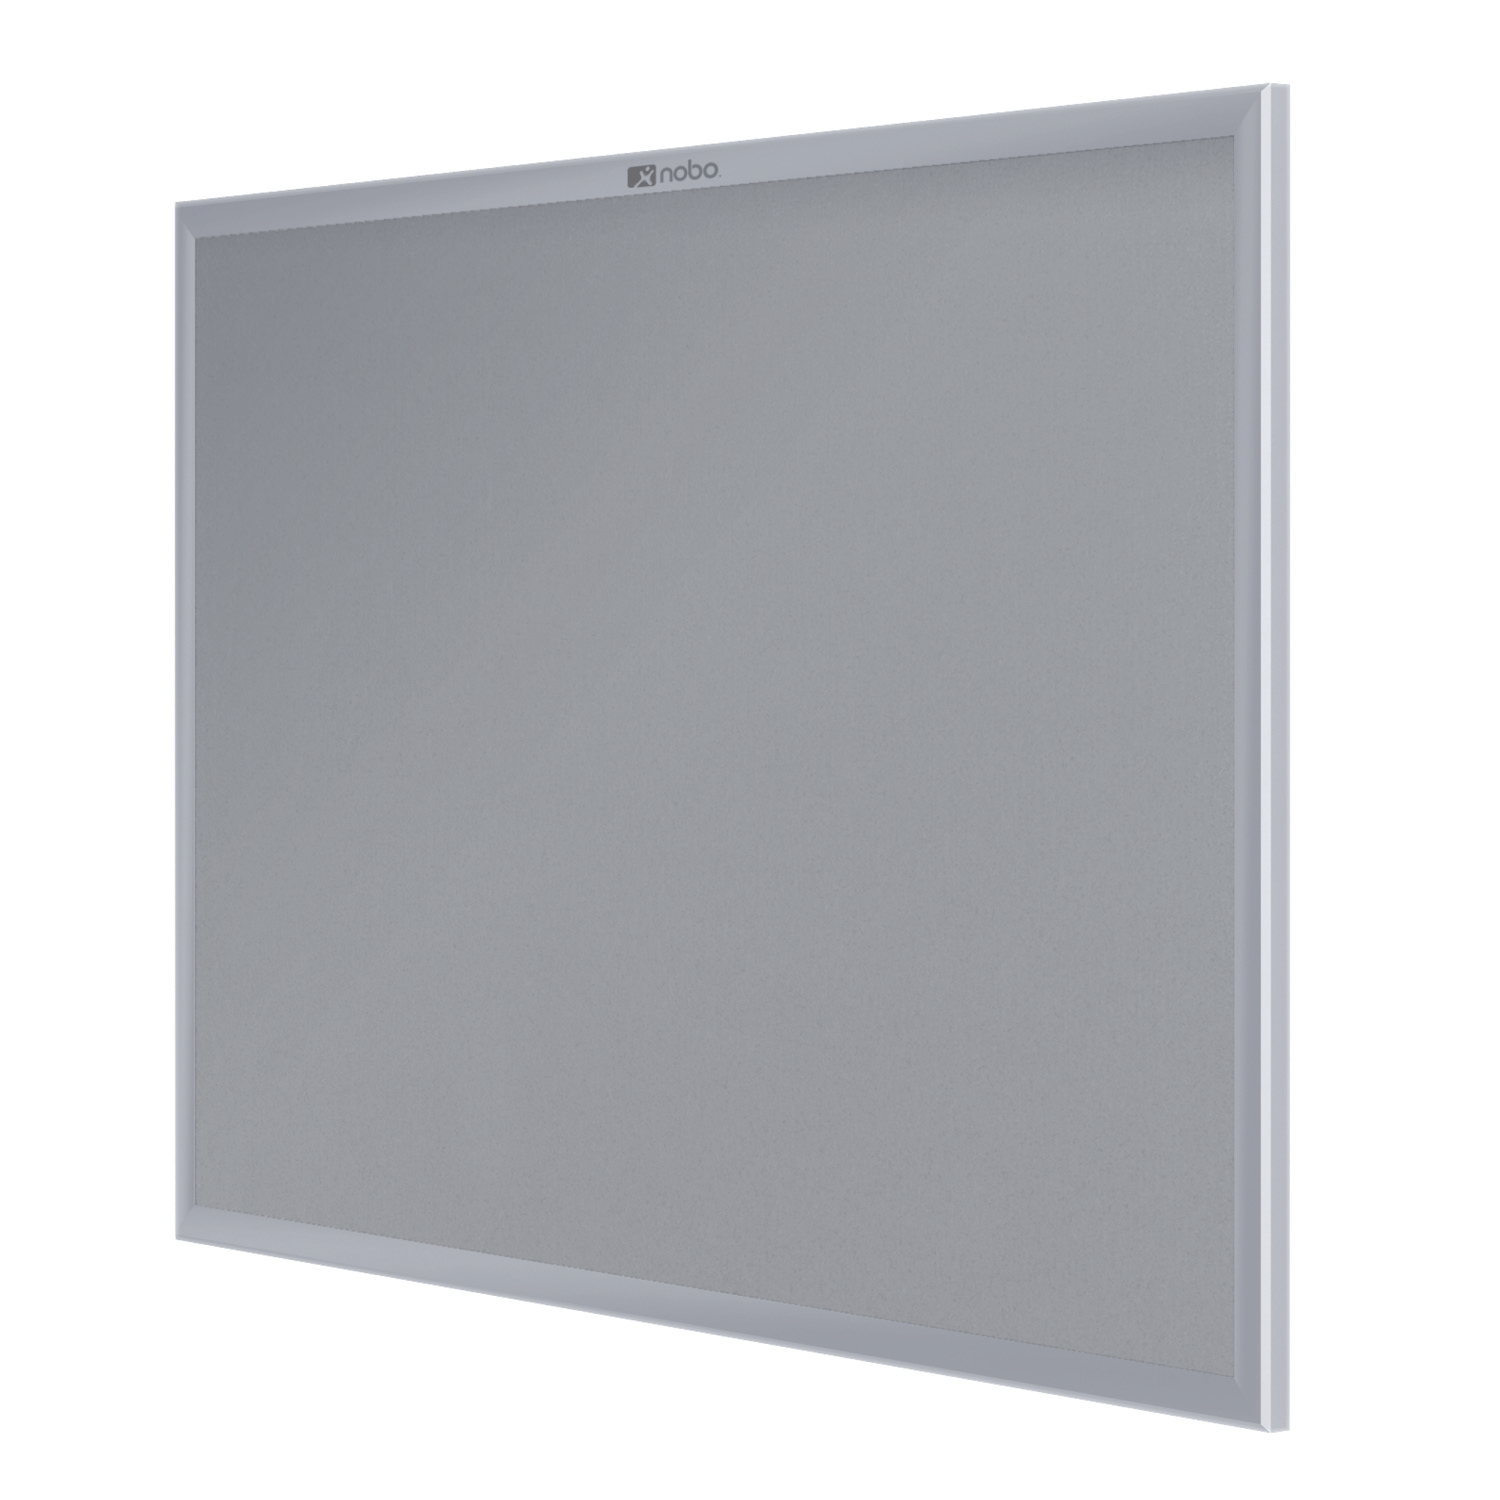 Nobo Prestige Grey Felt Noticeboard Aluminium Frame 900x600mm